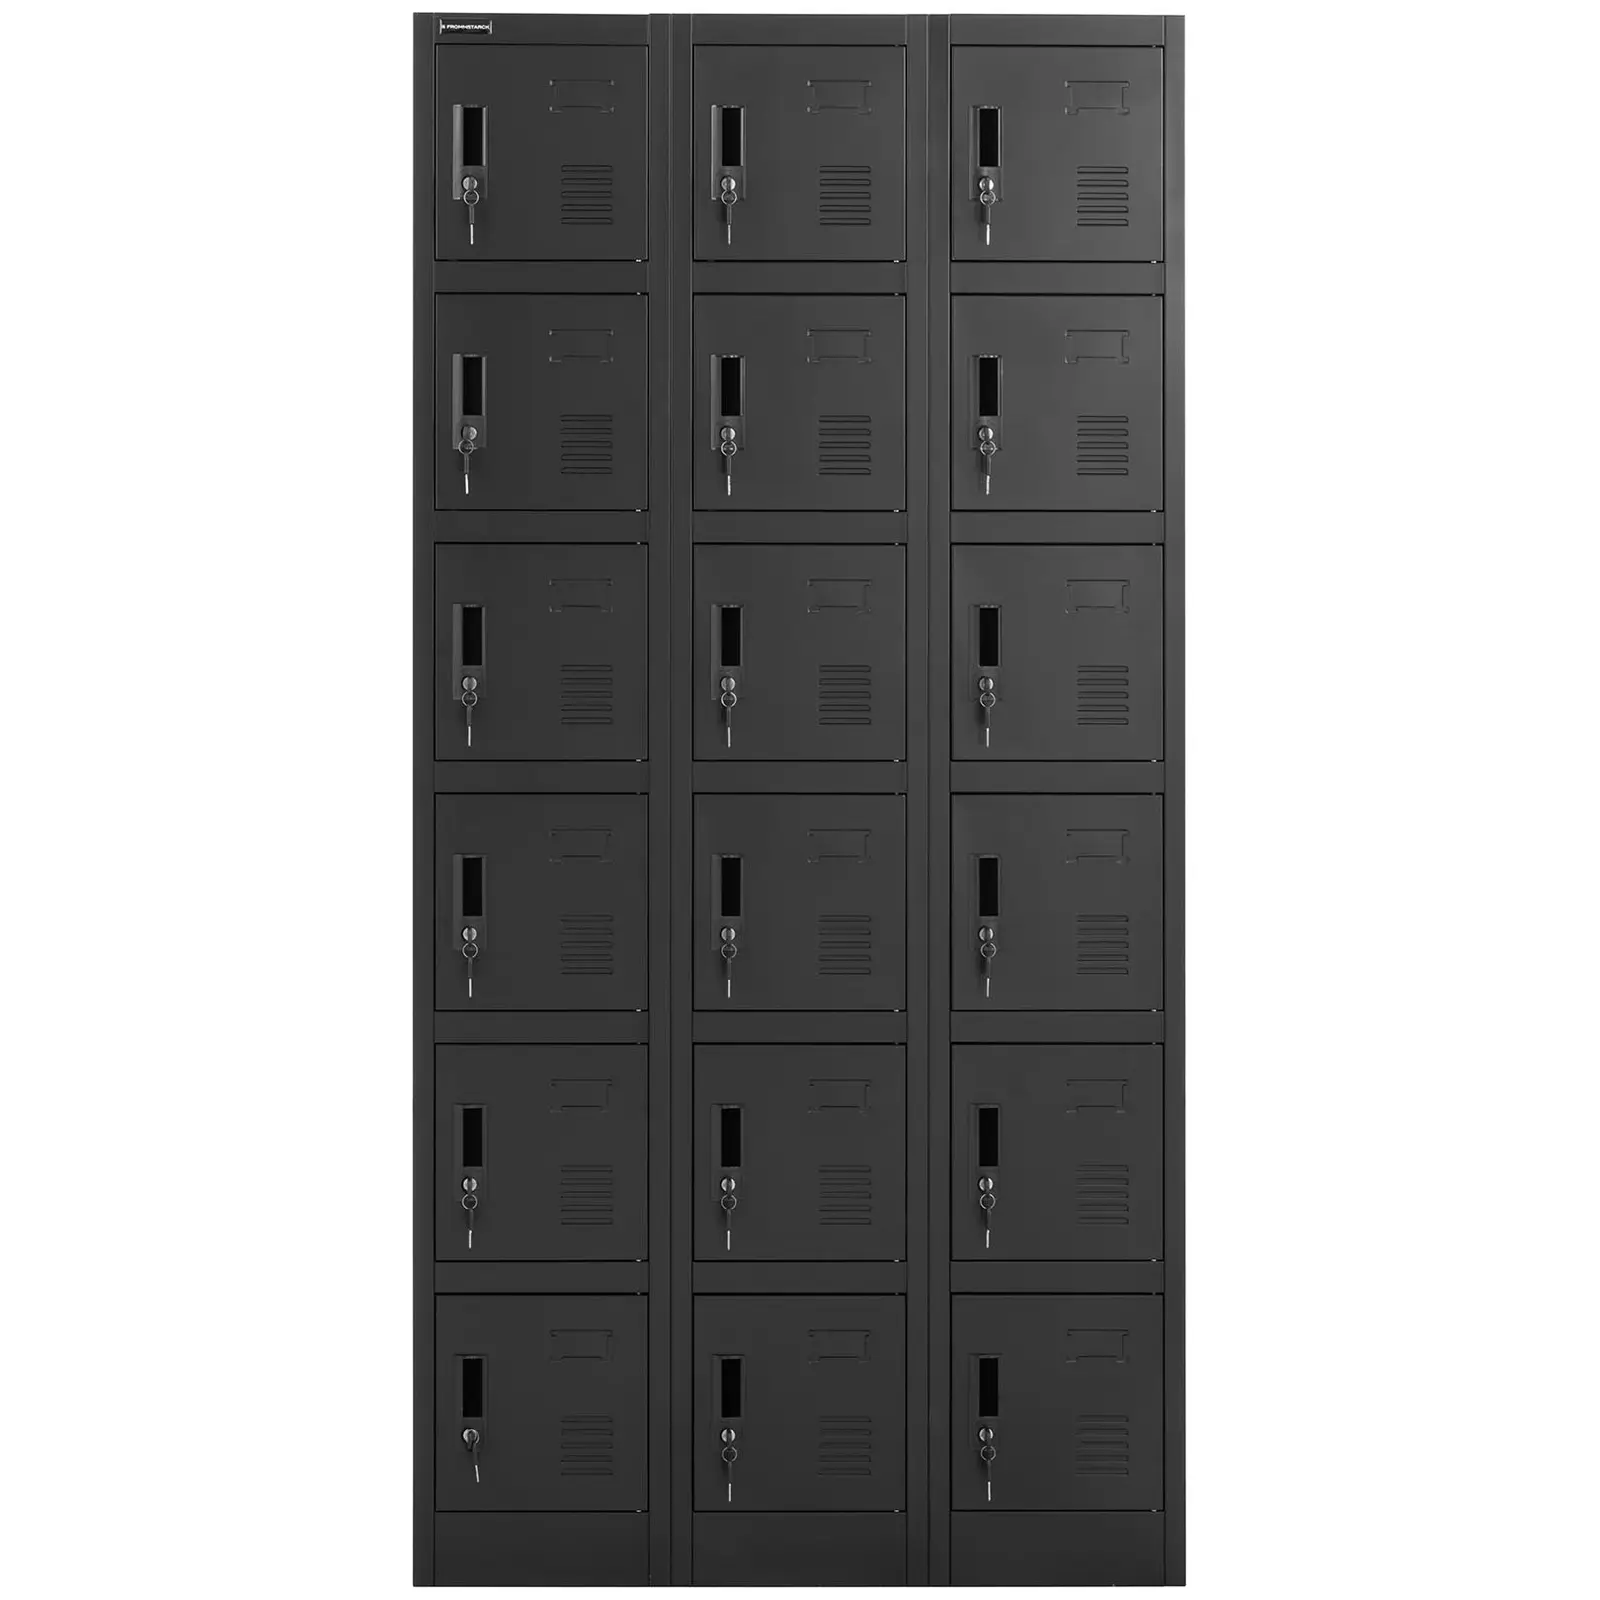 Locker - 18 shelves - lockable -200 kg